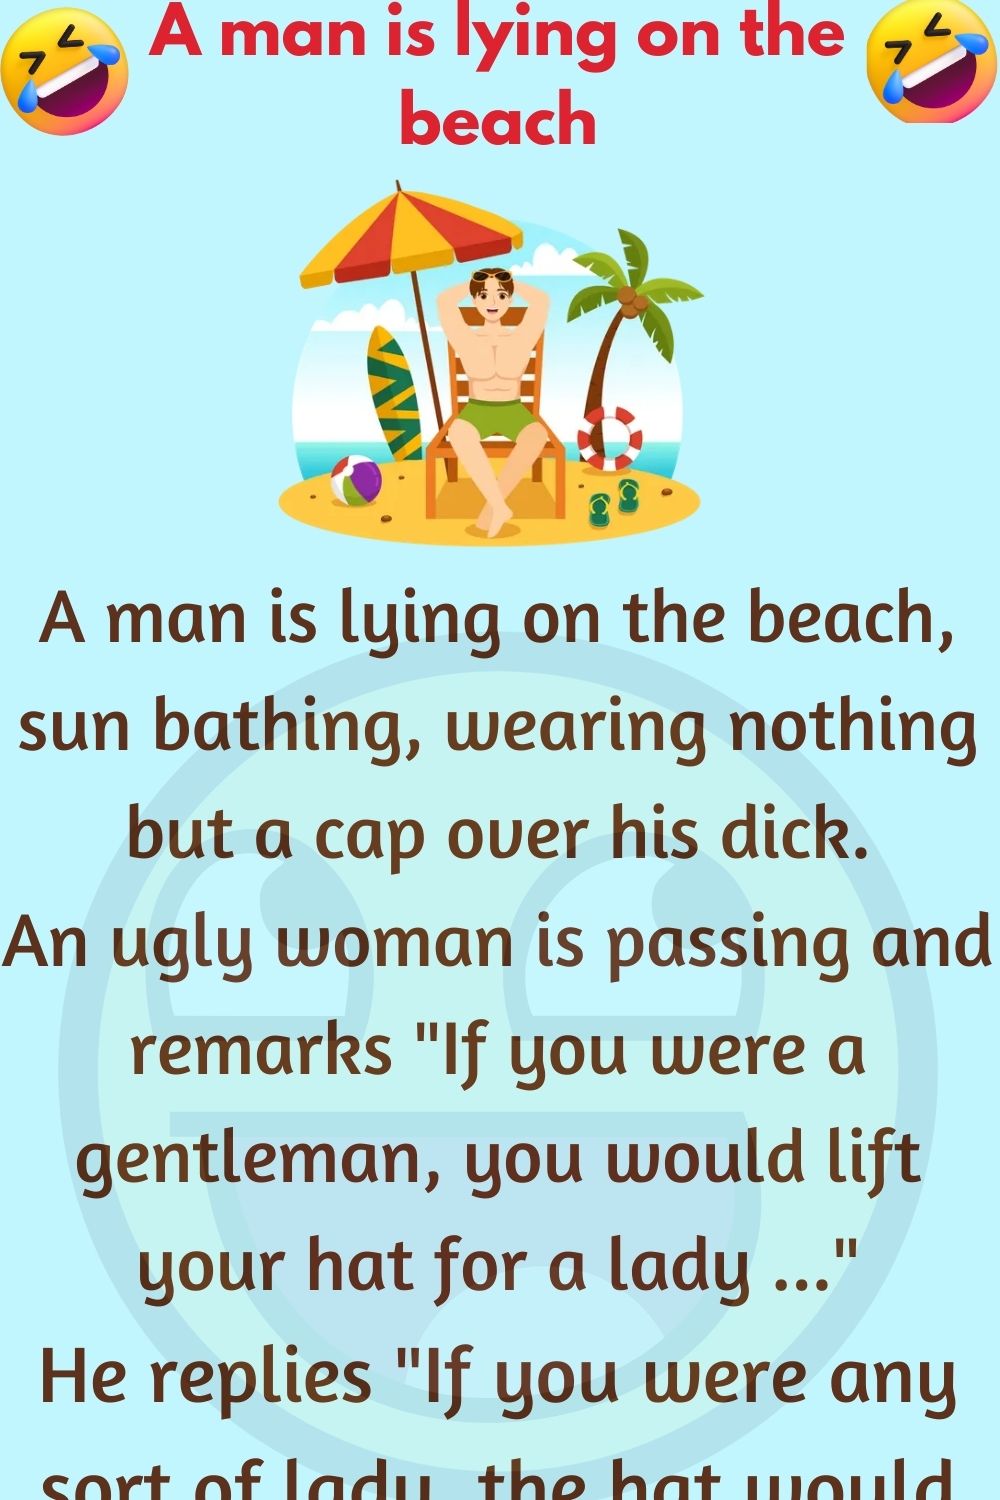 A man is lying on the beach